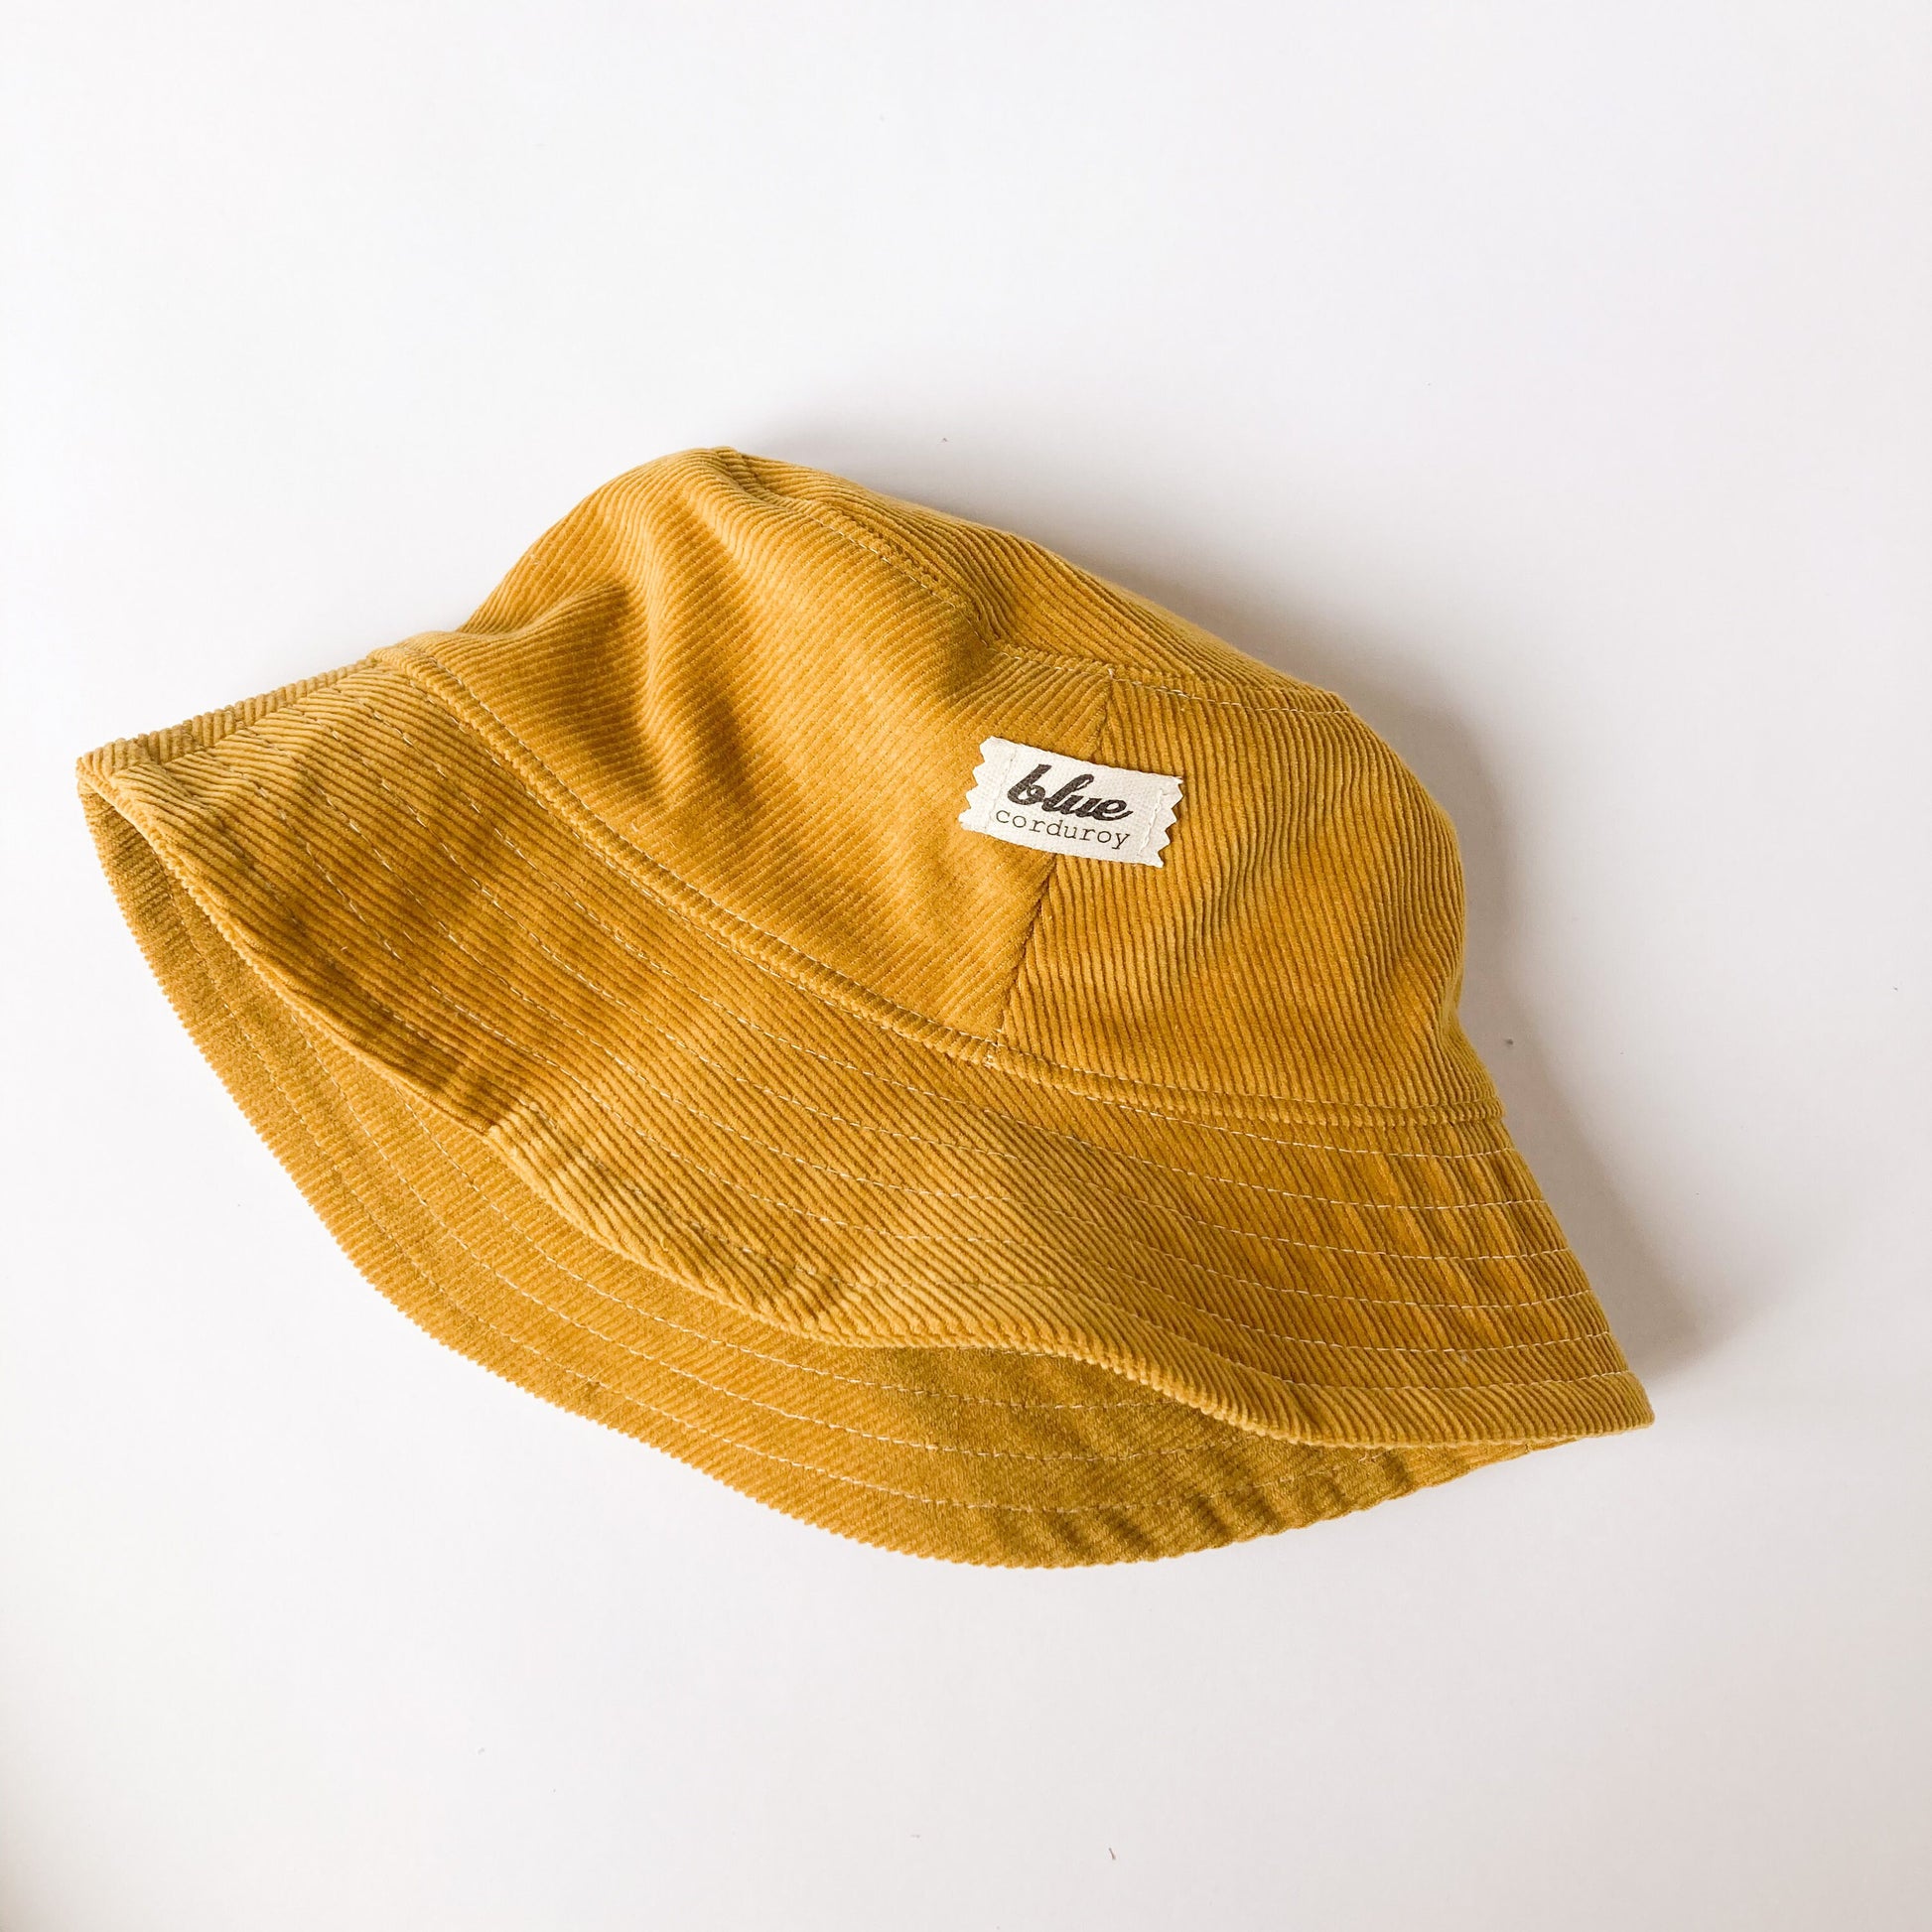 Corduroy Bucket Hat, Summer Hat Women, Brim Sun Hat, Gift for Teen Girl, Packable Hat, Beach Bucket Hat, Yellow Cap, Beach Accessory